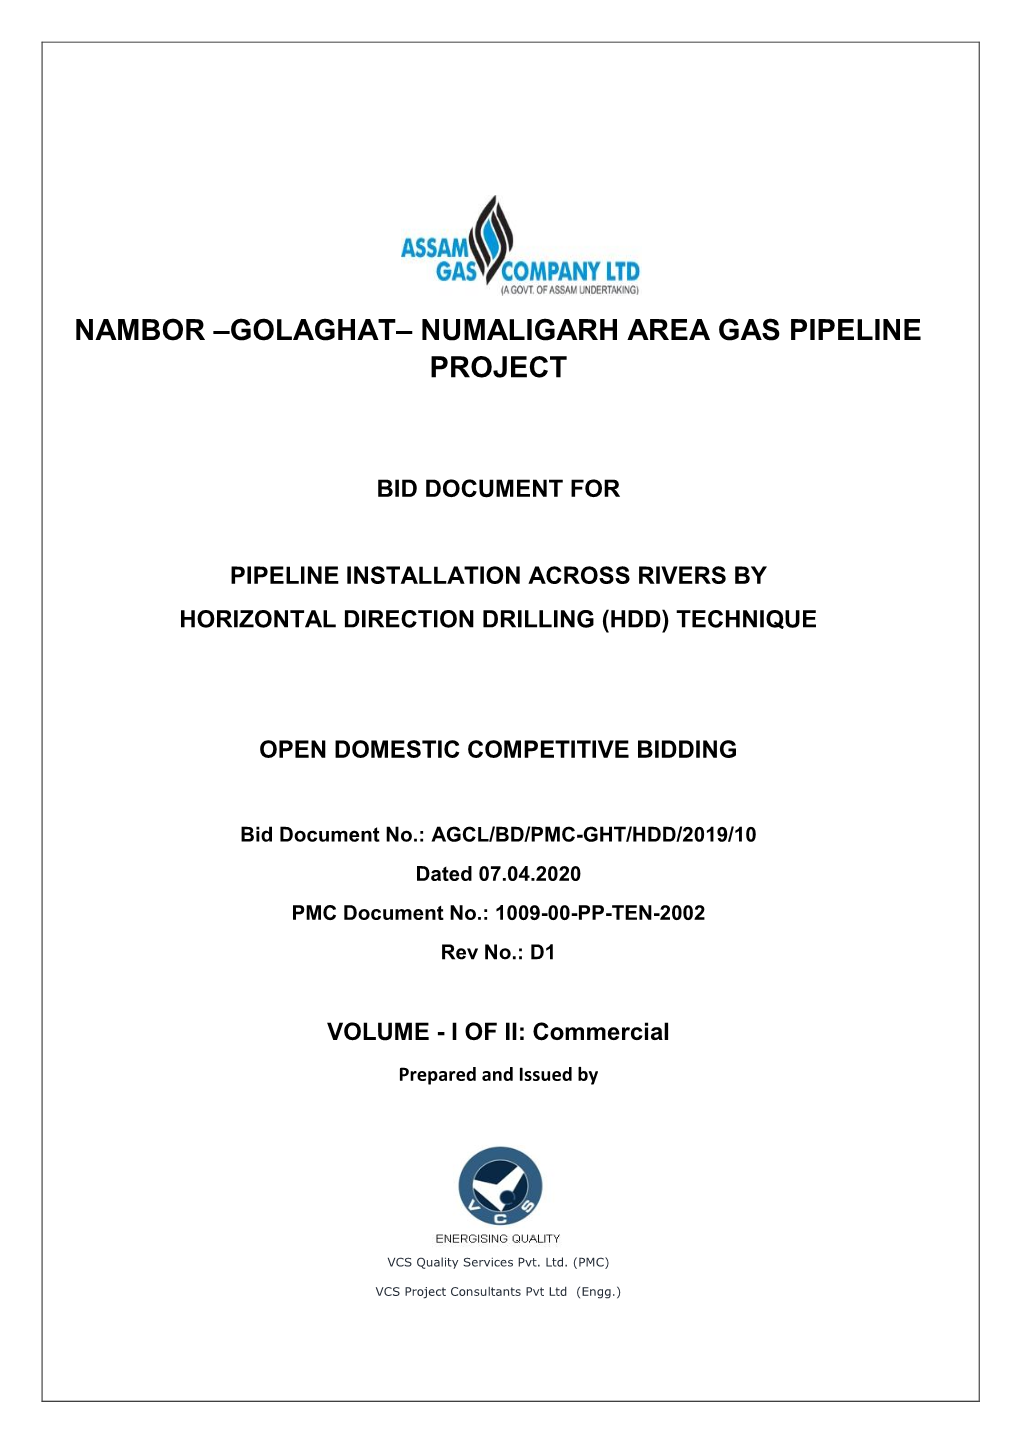 Golaghat– Numaligarh Area Gas Pipeline Project